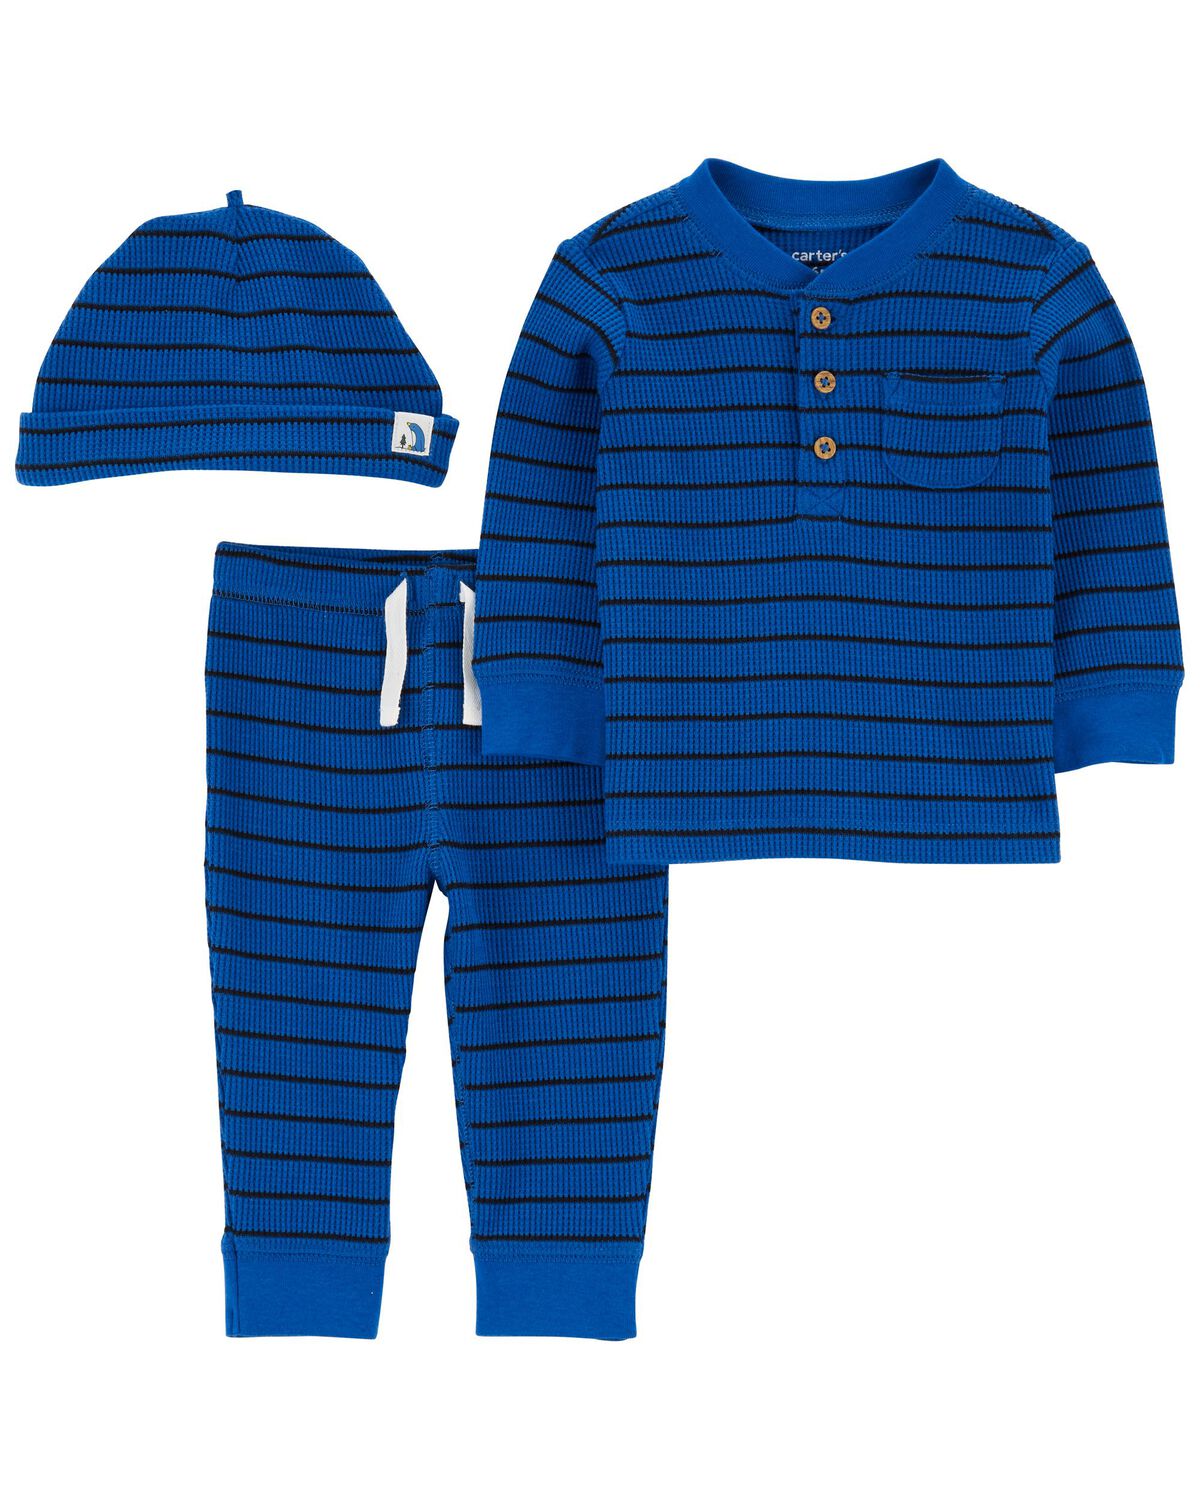 Blue Baby 3-Piece Striped Outfit Set | carters.com